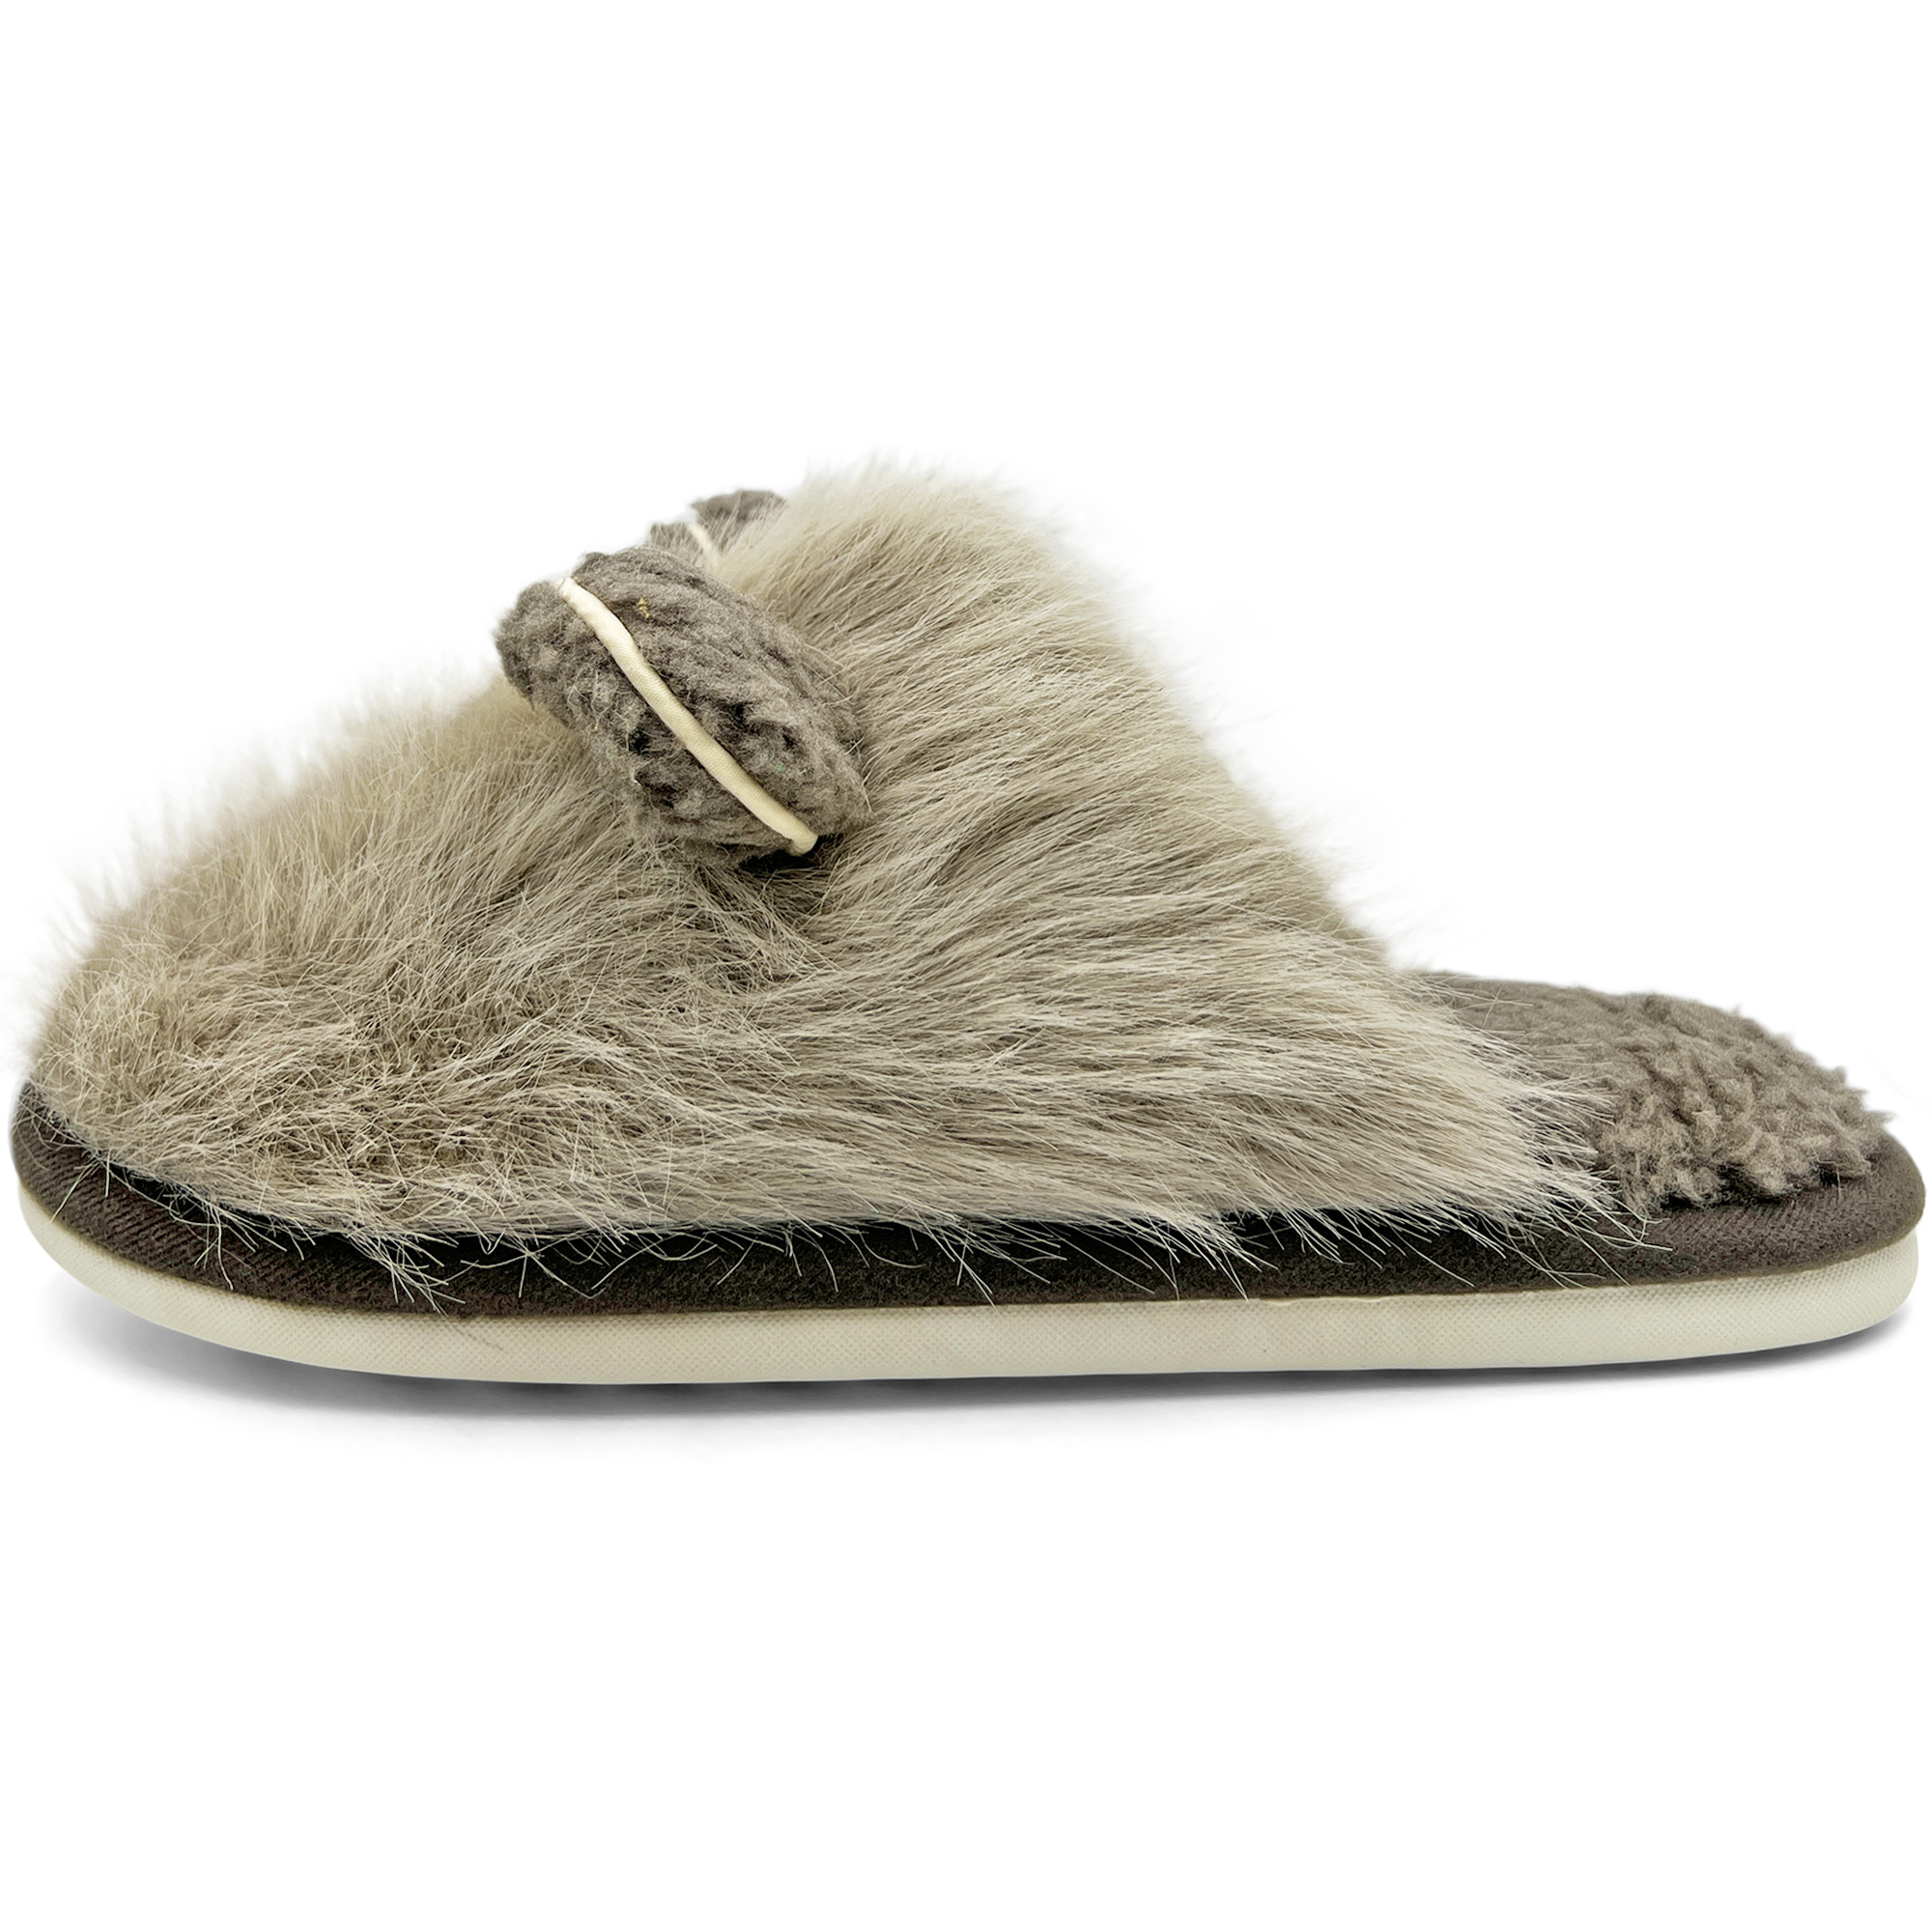 LAVRA Women's Slippers Fuzzy Fur House Shoes Soft Bedroom Slip On | eBay